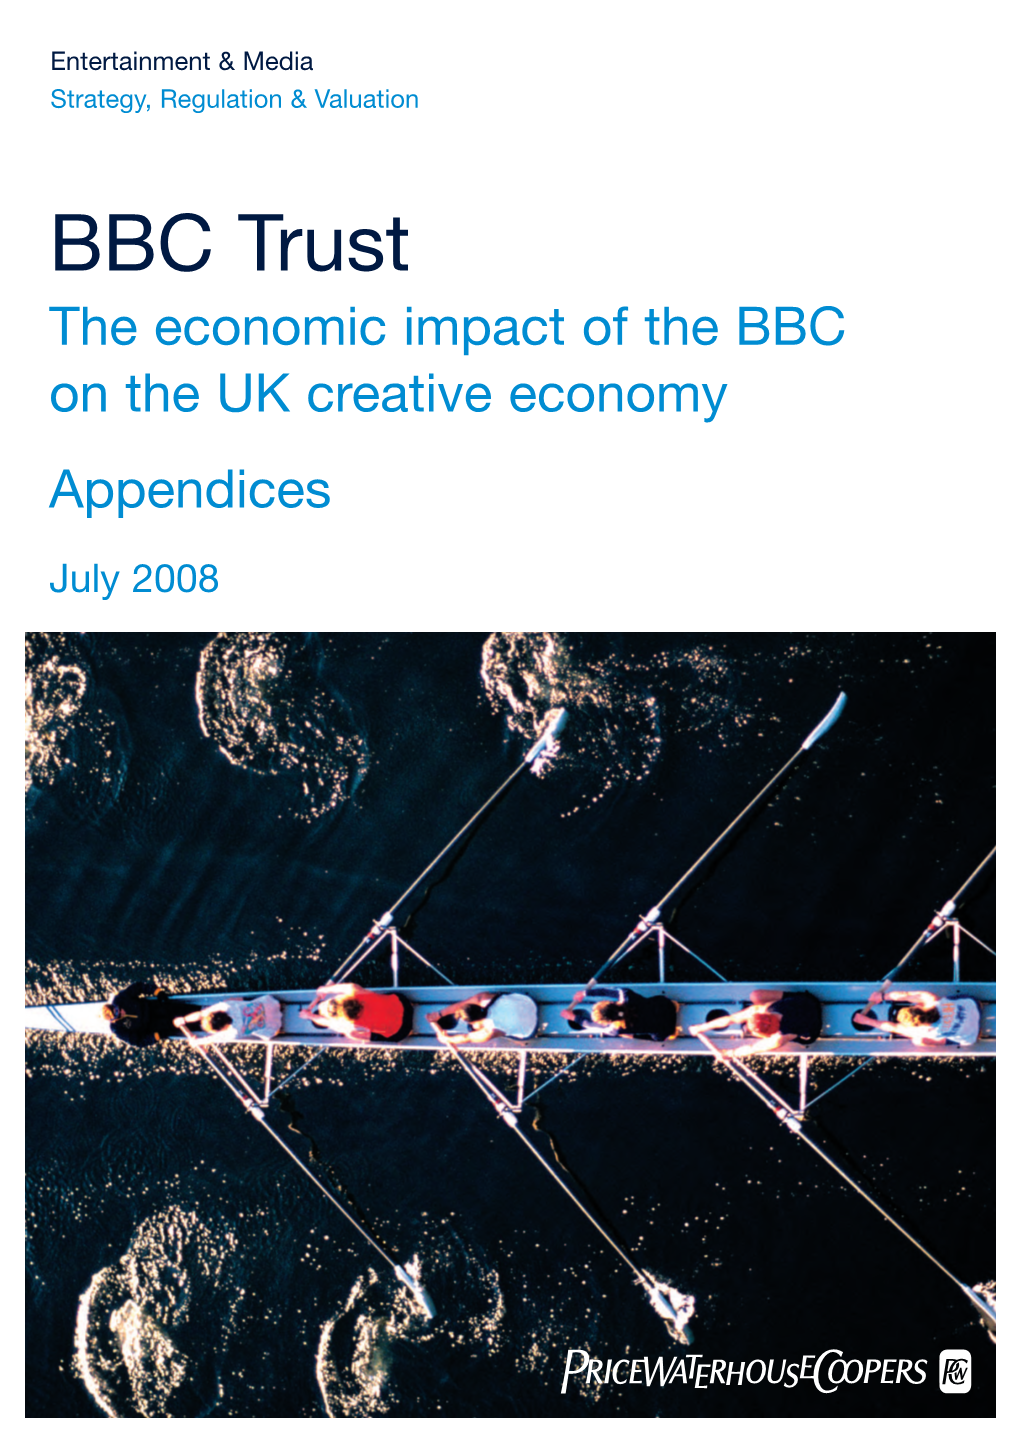 BBC Trust, the Economic Impact of the BBC on the UK Creative